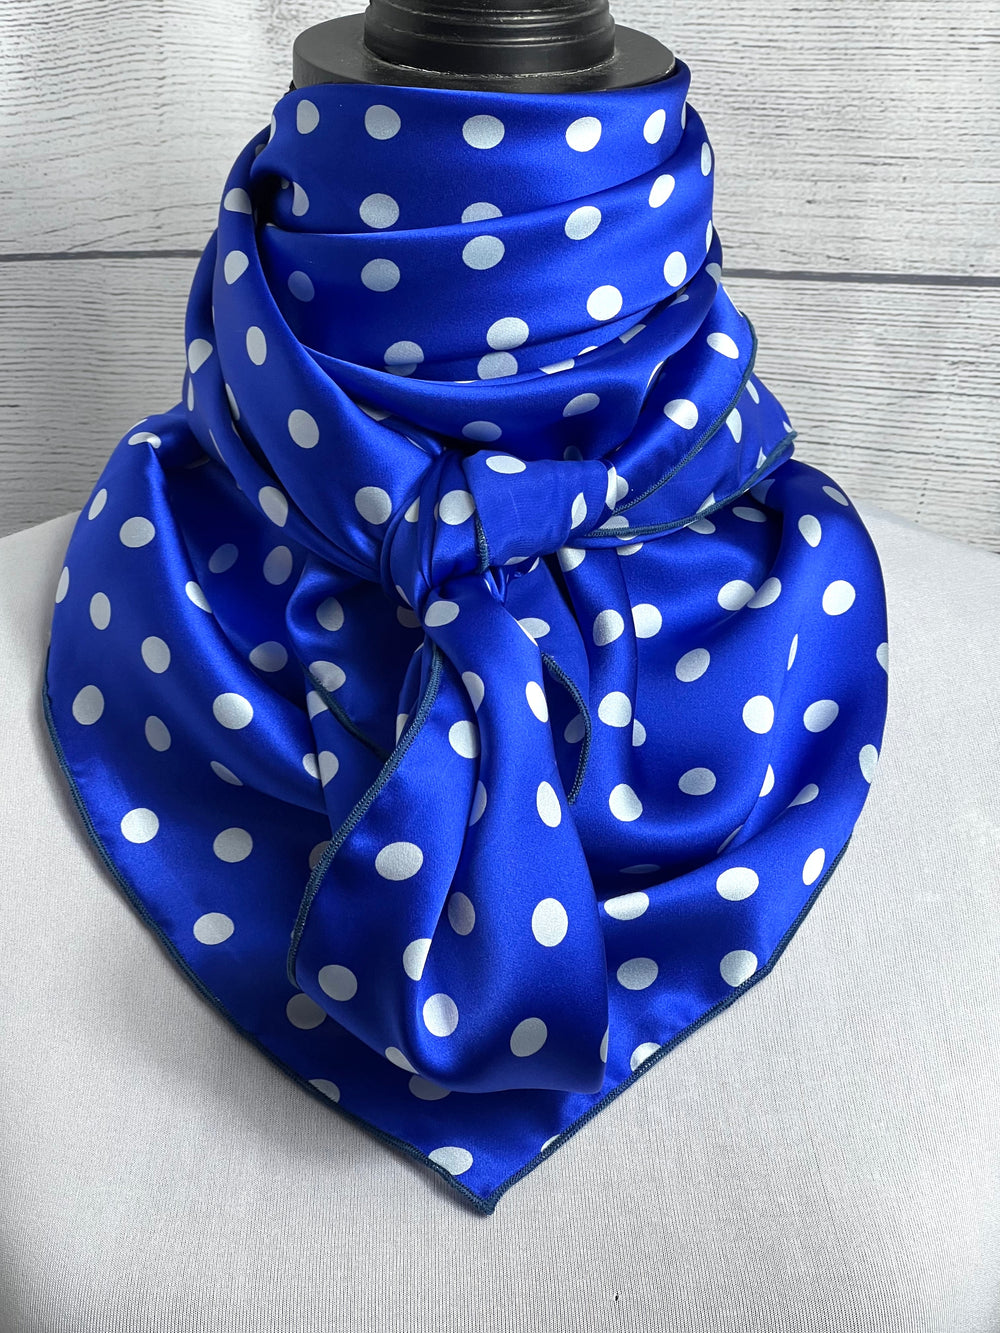 The Royal Blue Polka Dot Silk Rag